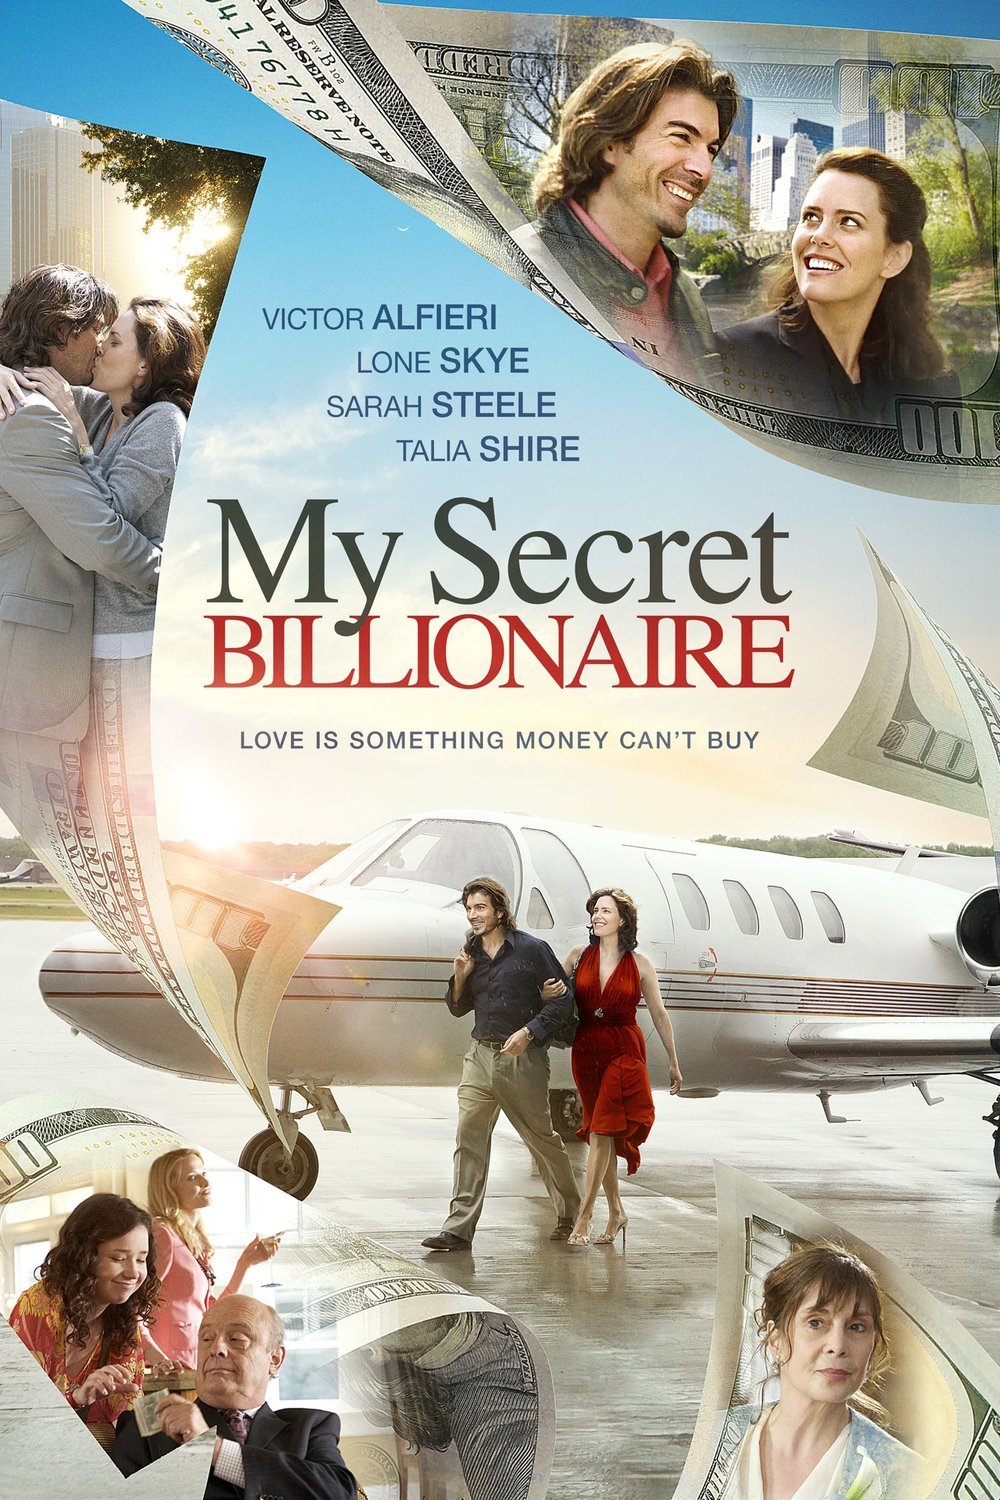 Poster of the movie My Secret Billionaire